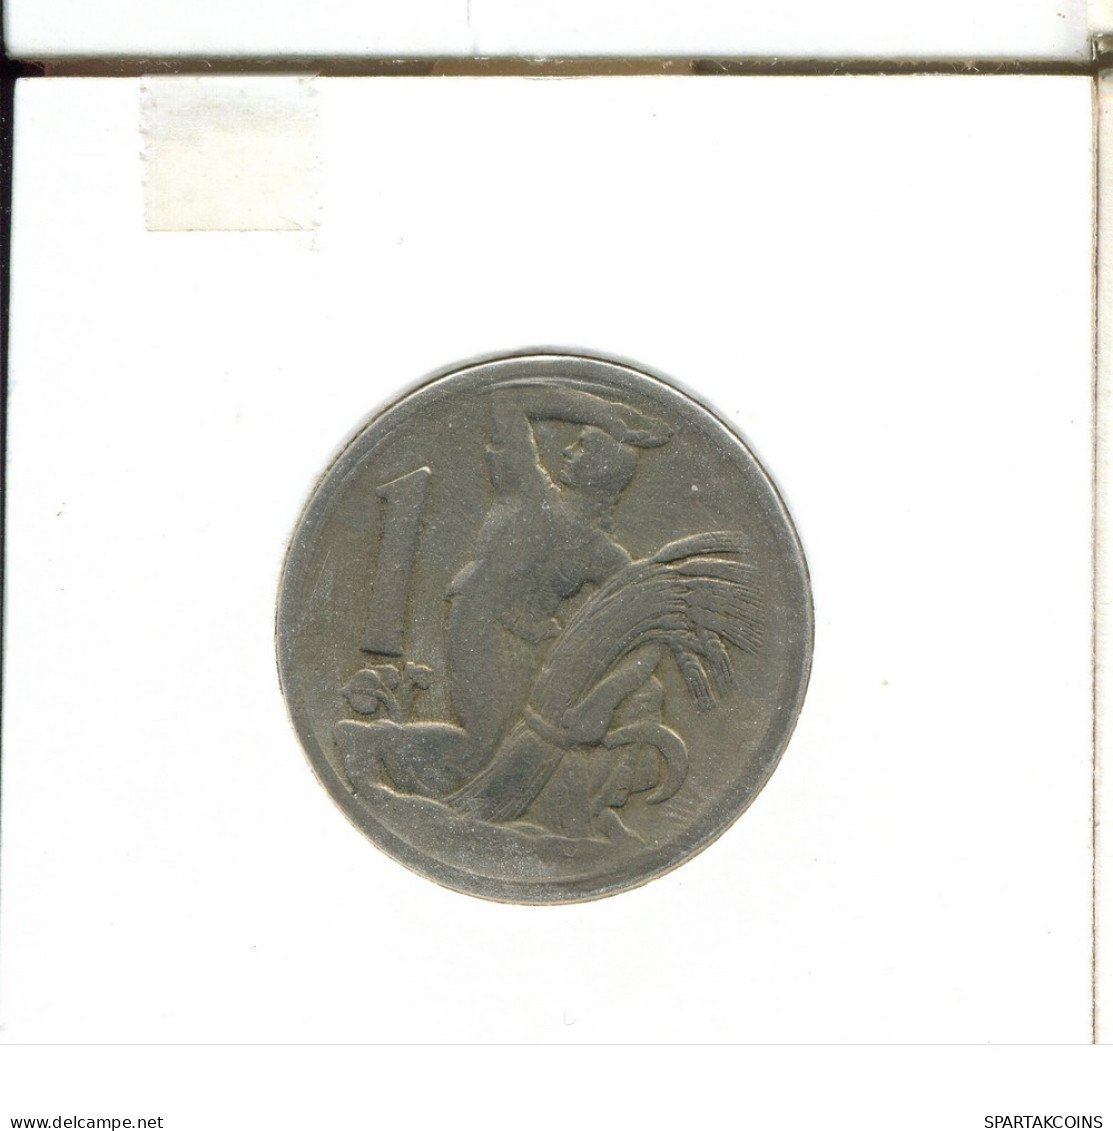 1 KORUNA 1924 CZECHOSLOVAKIA Coin #AS515.U.A - Tschechoslowakei